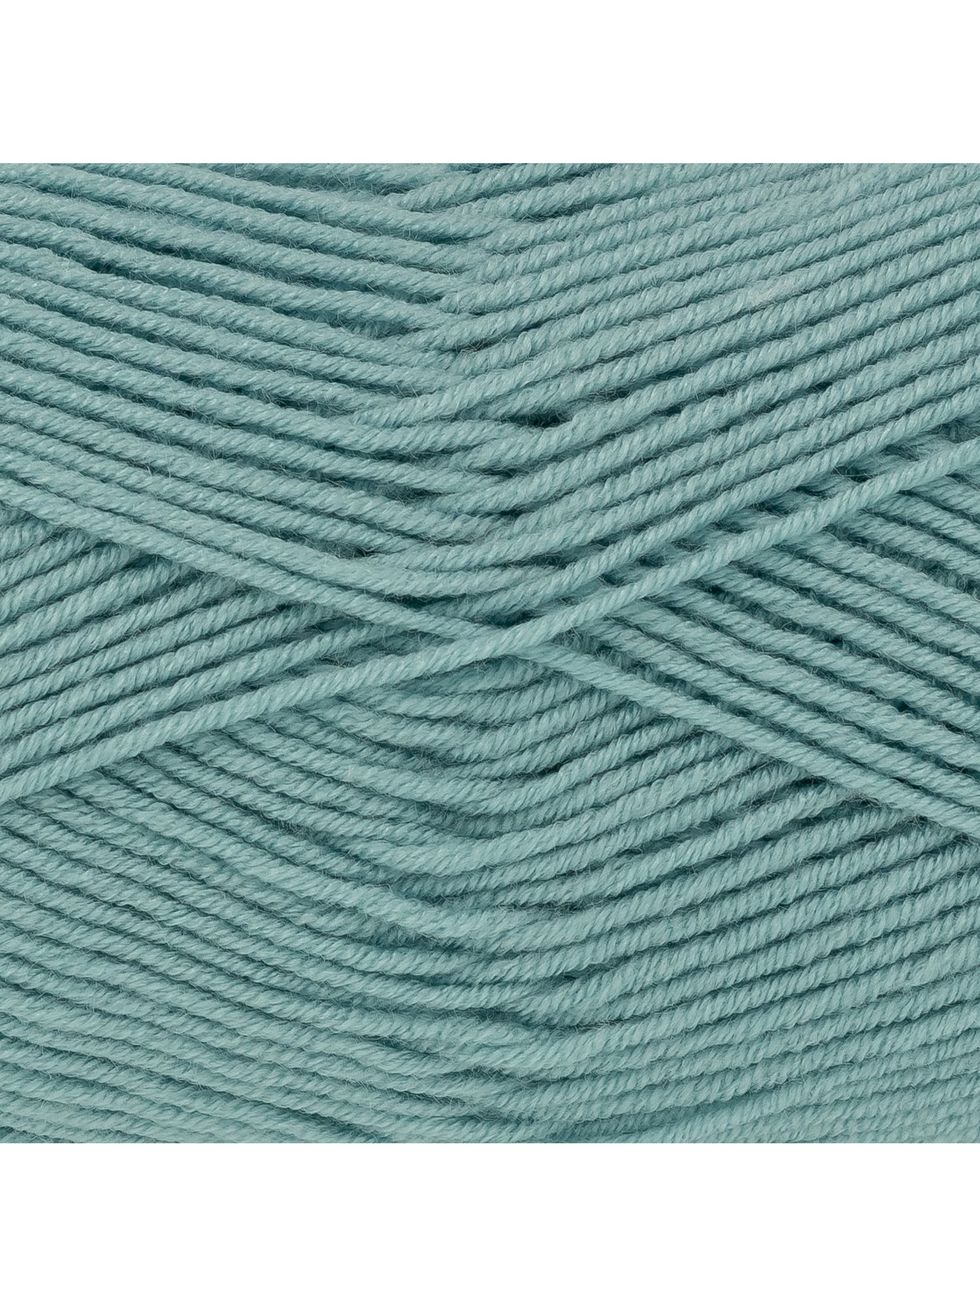 King Cole Cherished DK Knitting Yarn, 100g, Turquoise